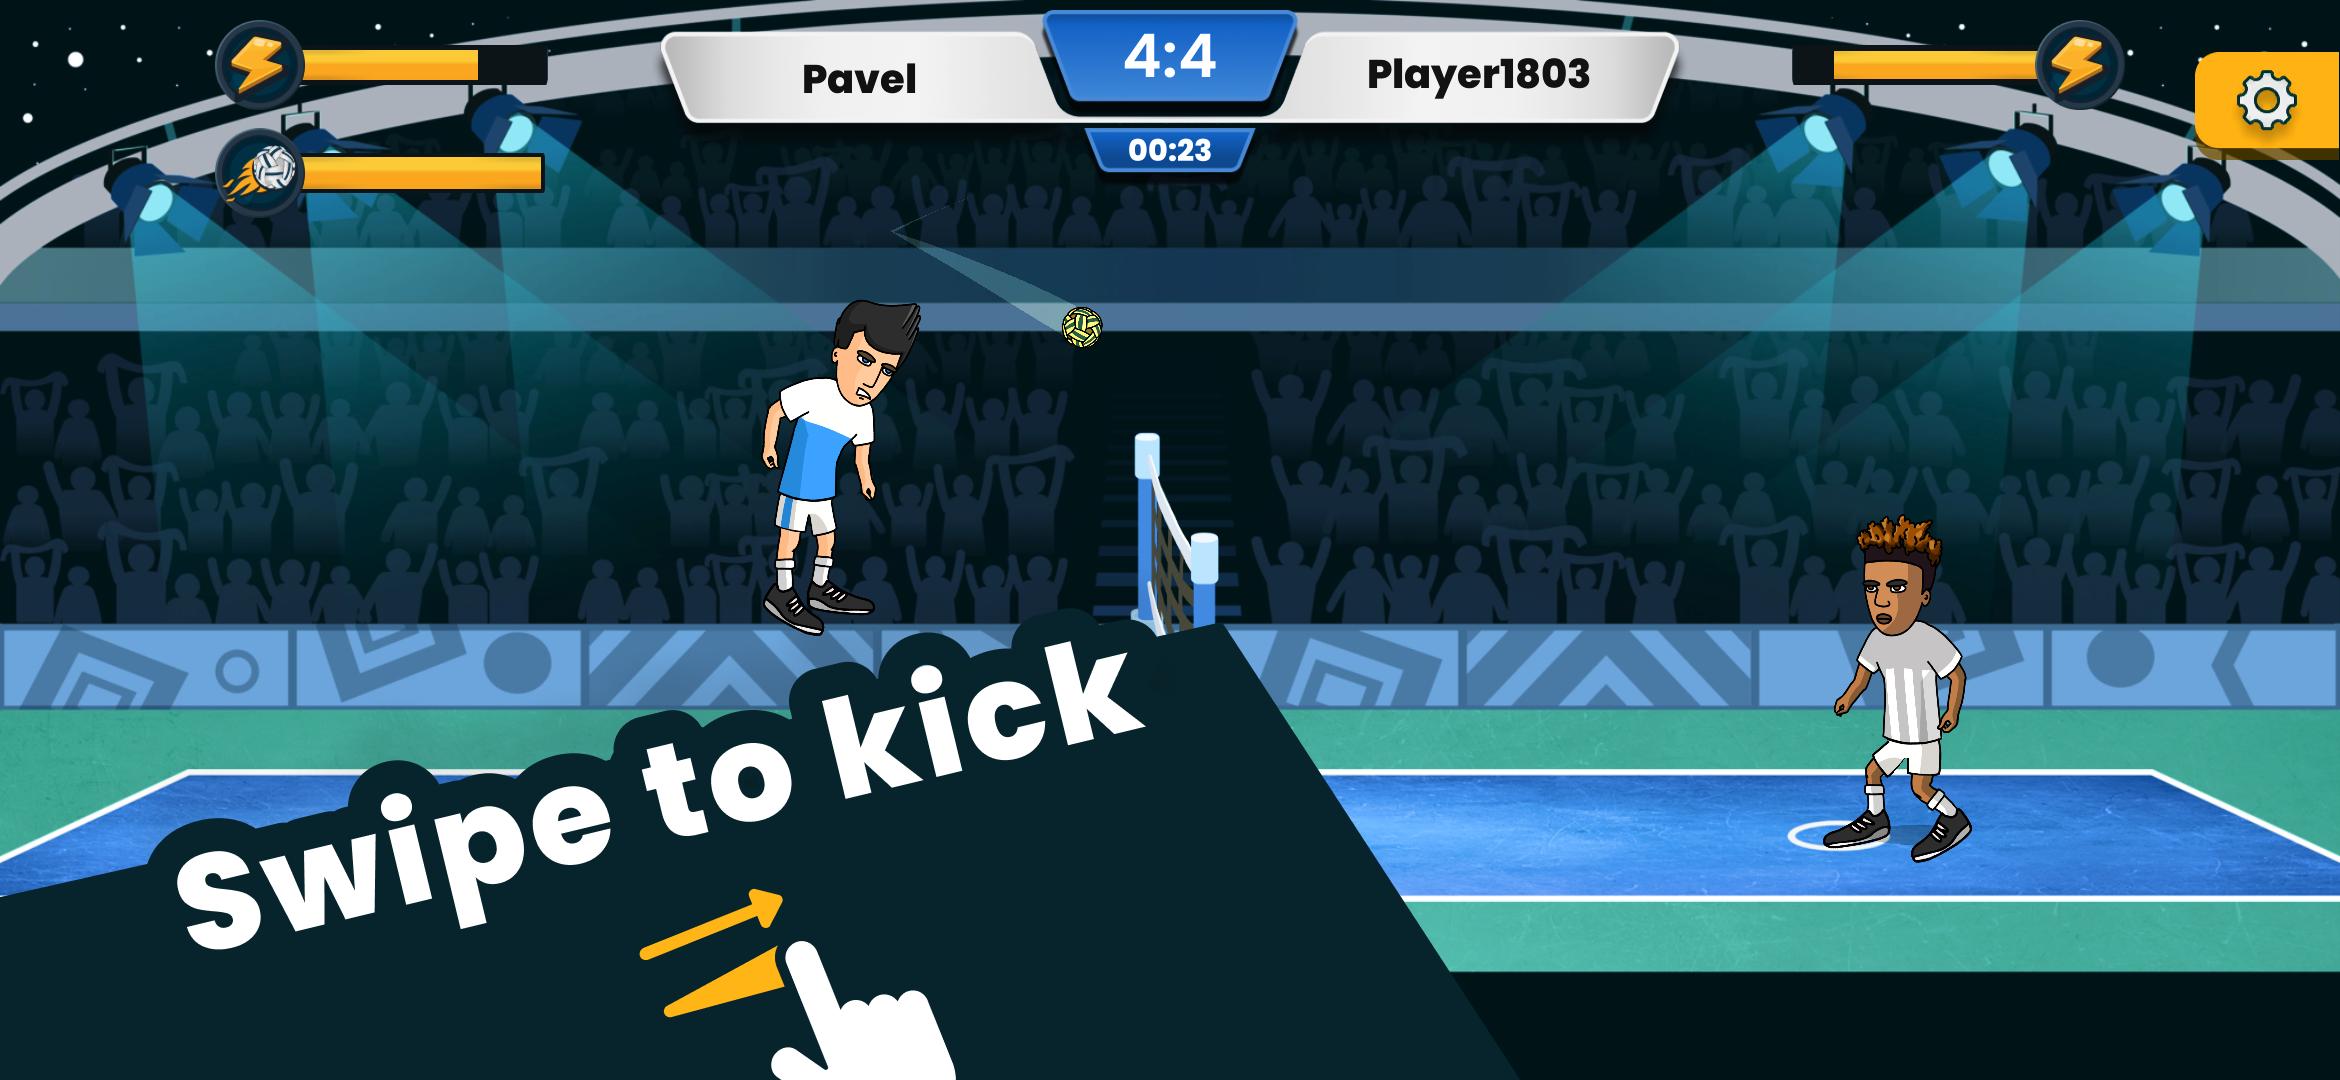 Sepak soccer: street challenge sports game 0.41.3 Screenshot 17